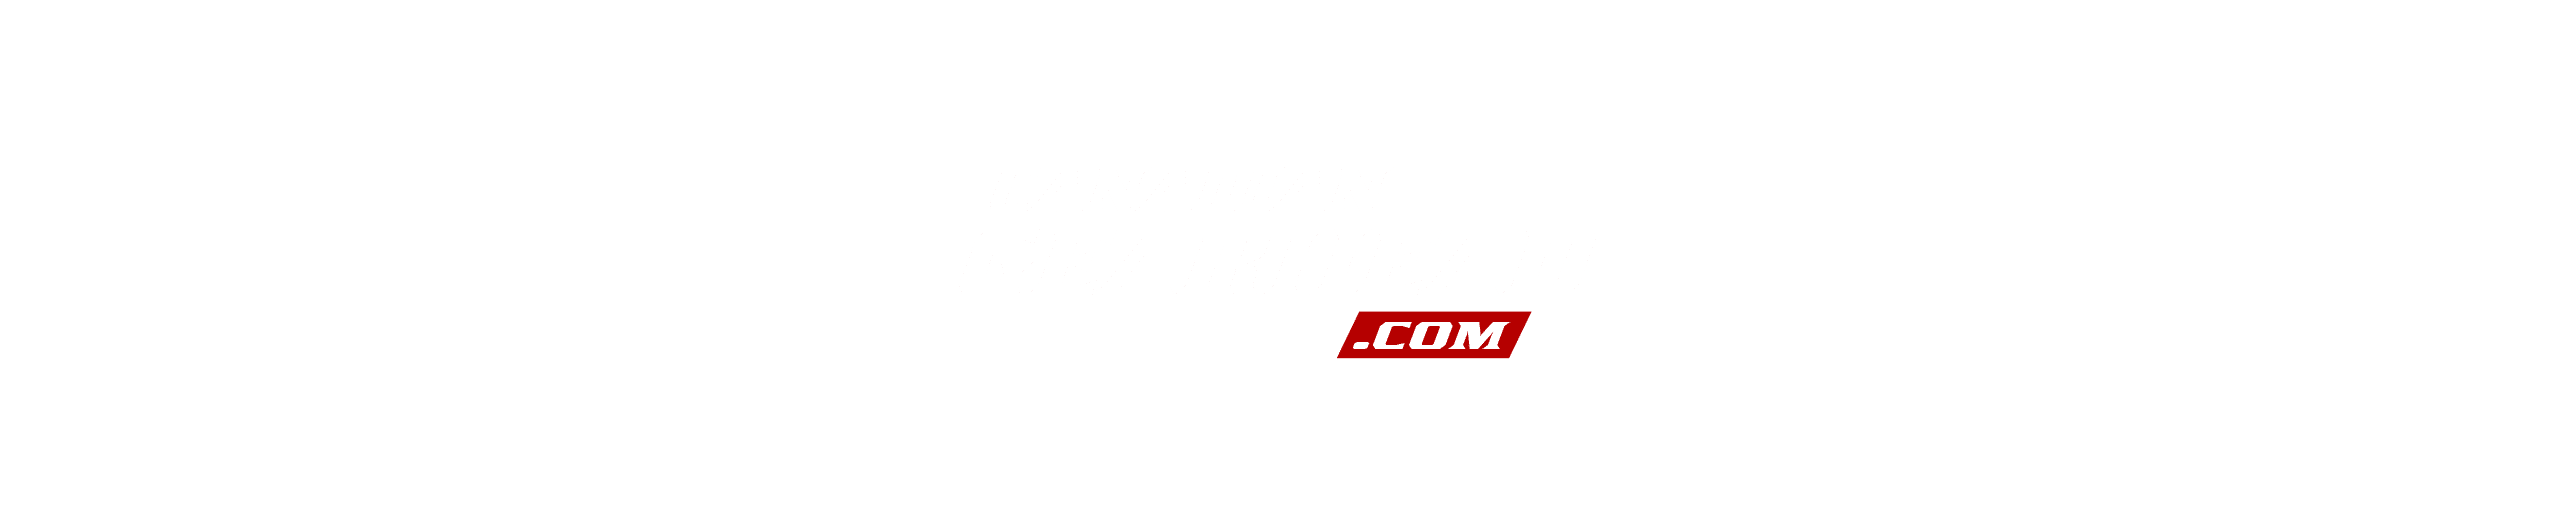 Canadian Gearhead